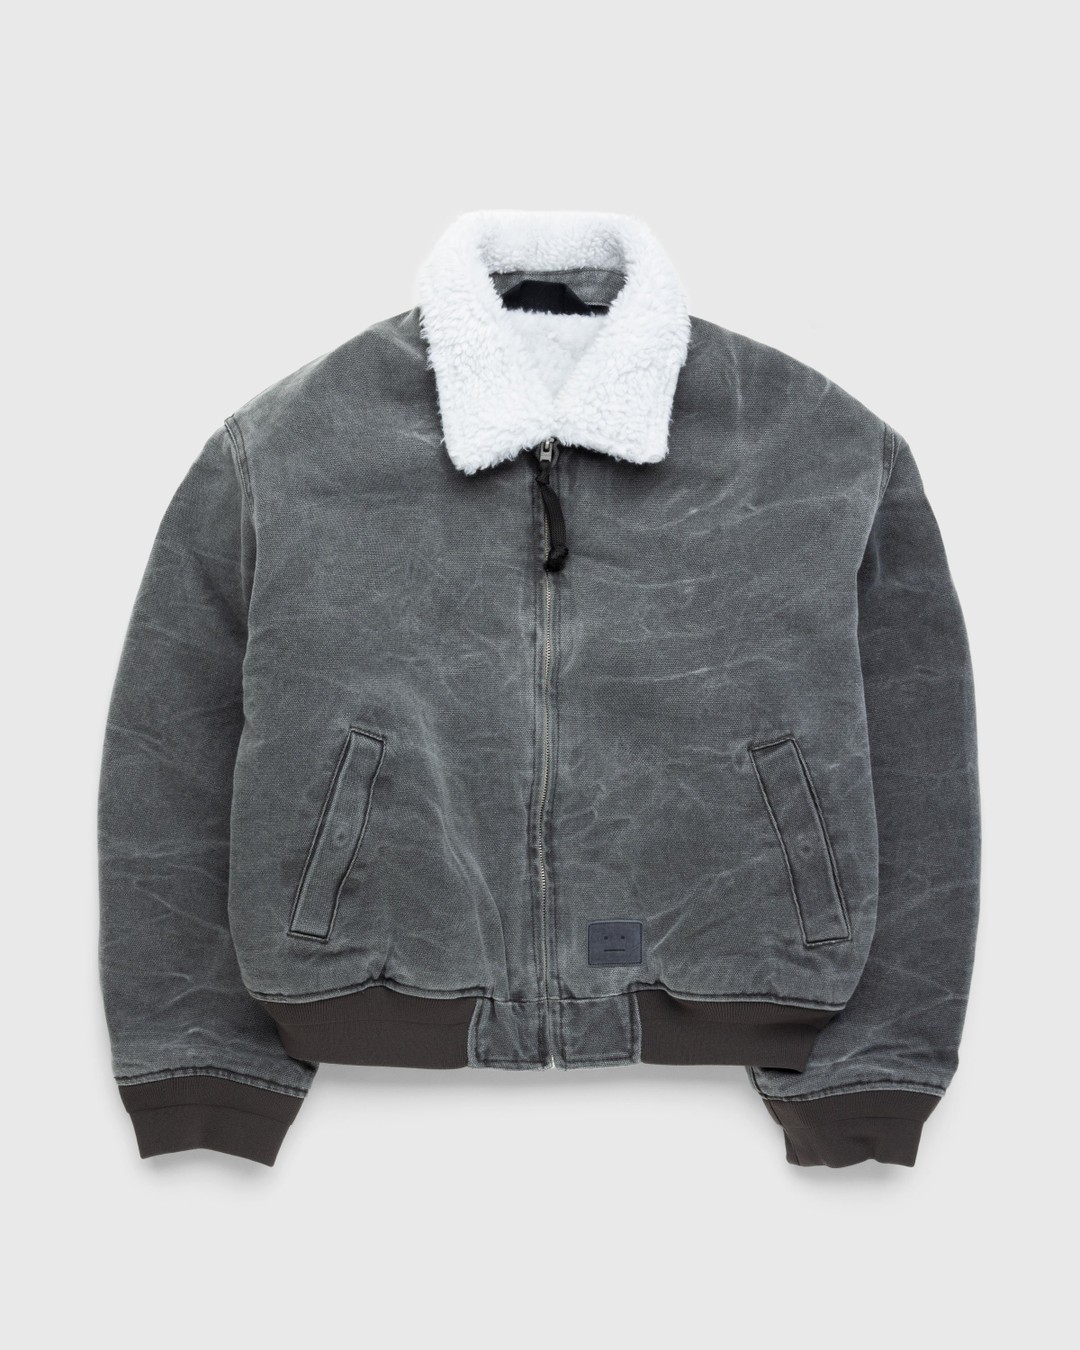 Acne Studios – Cotton Canvas Bomber Jacket Grey - Outerwear - Grey - Image 1